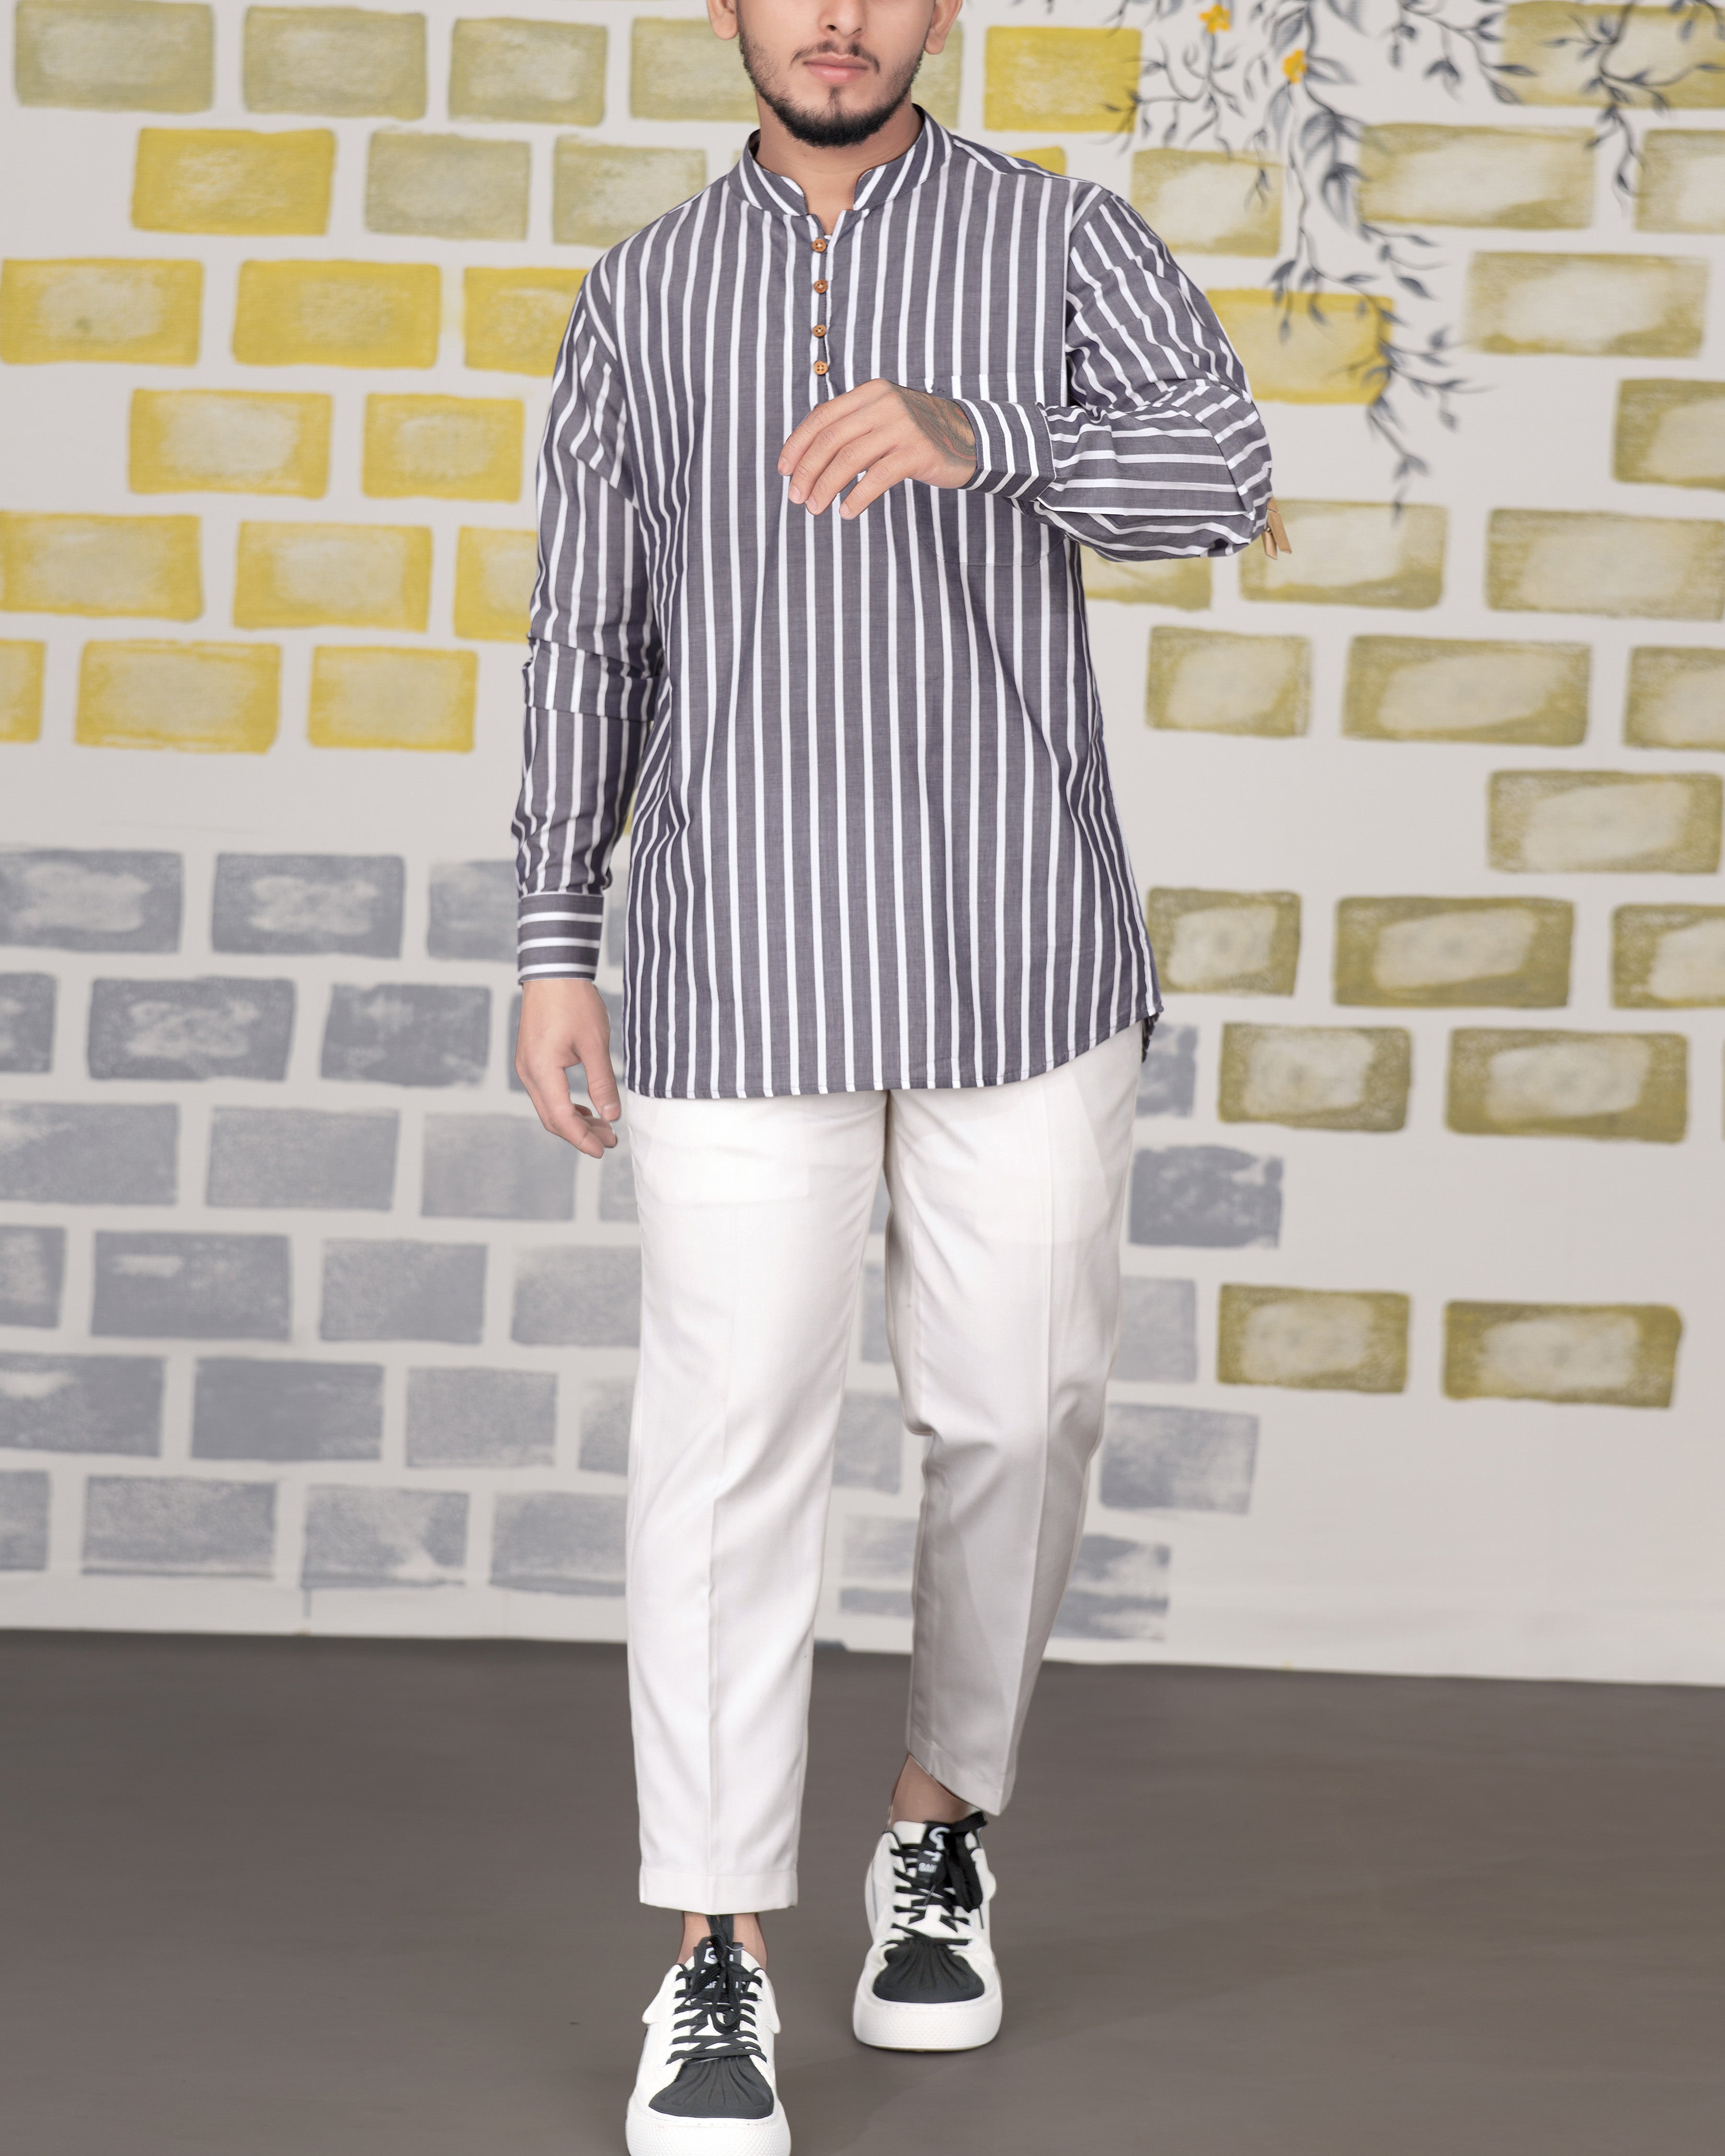 Cloudy Gray Striped Premium Cotton Kurta Shirt